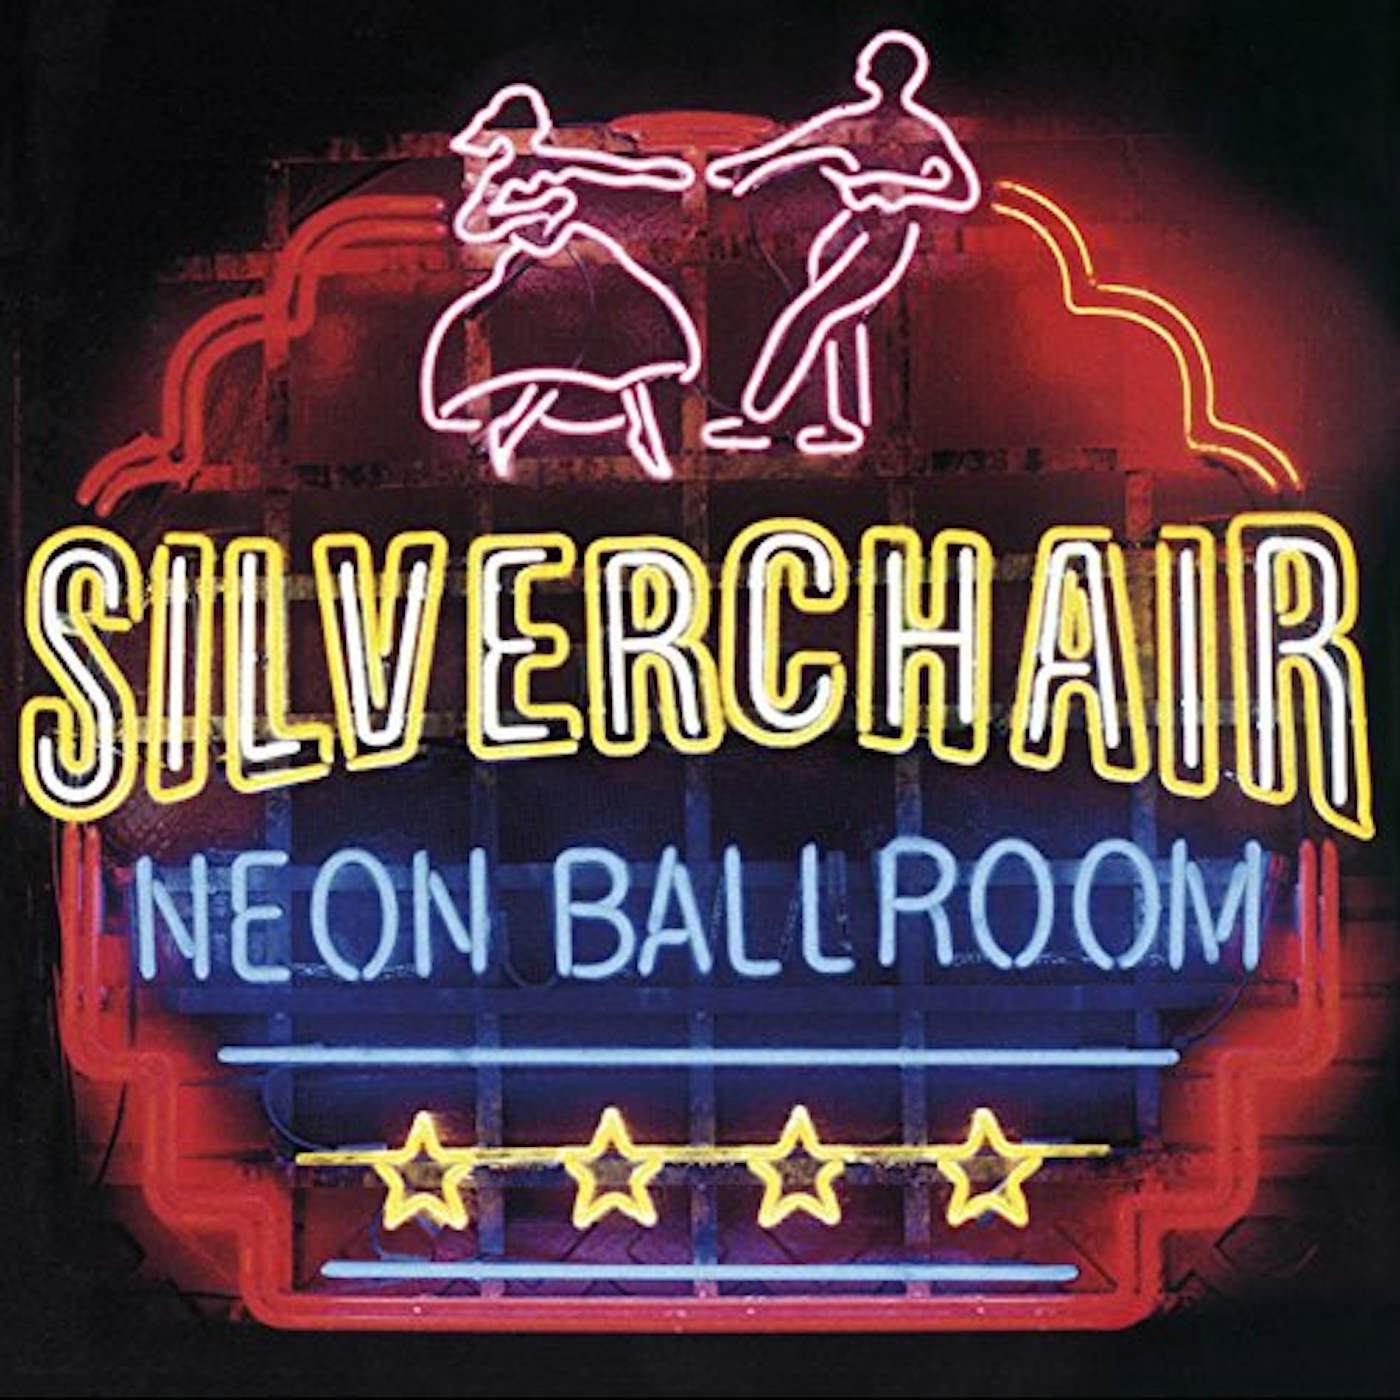 Silverchair NEON BALLROOM  (24BIT REMASTERED) CD